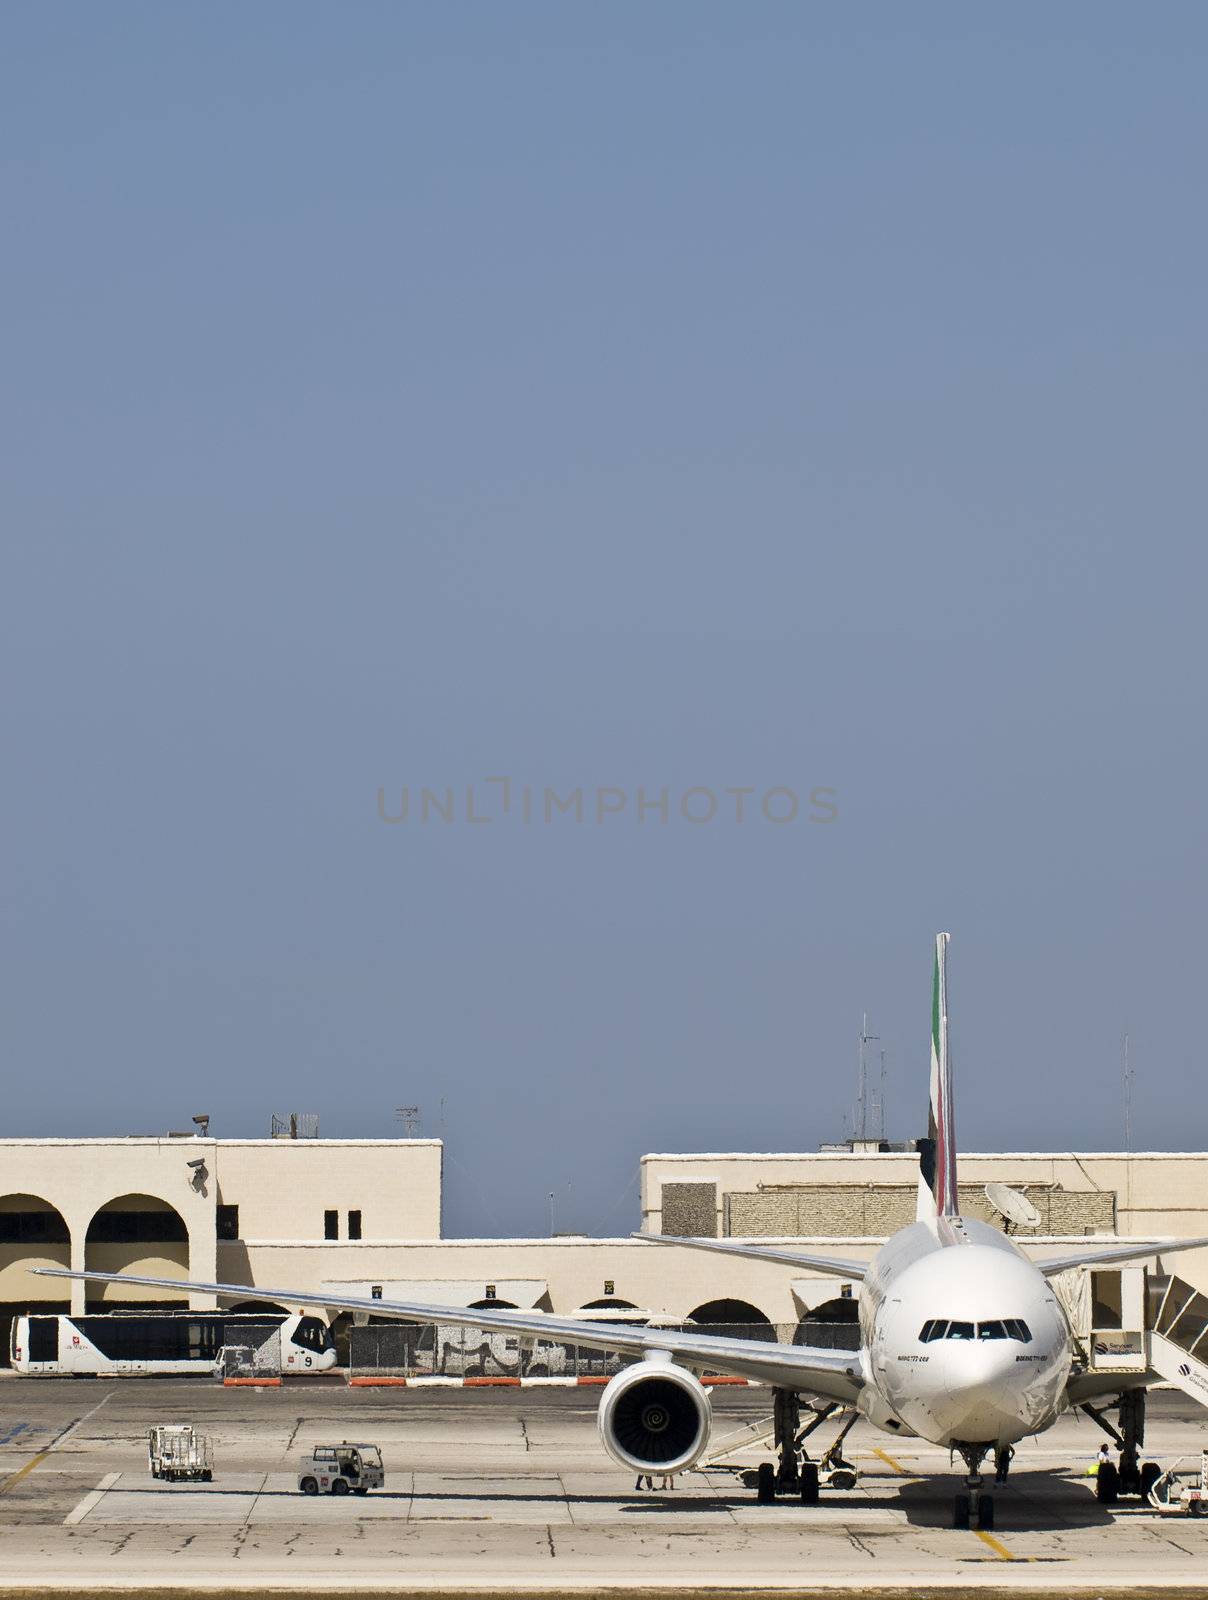 Civil aircraft on a terminal apron at an airfield in Malta